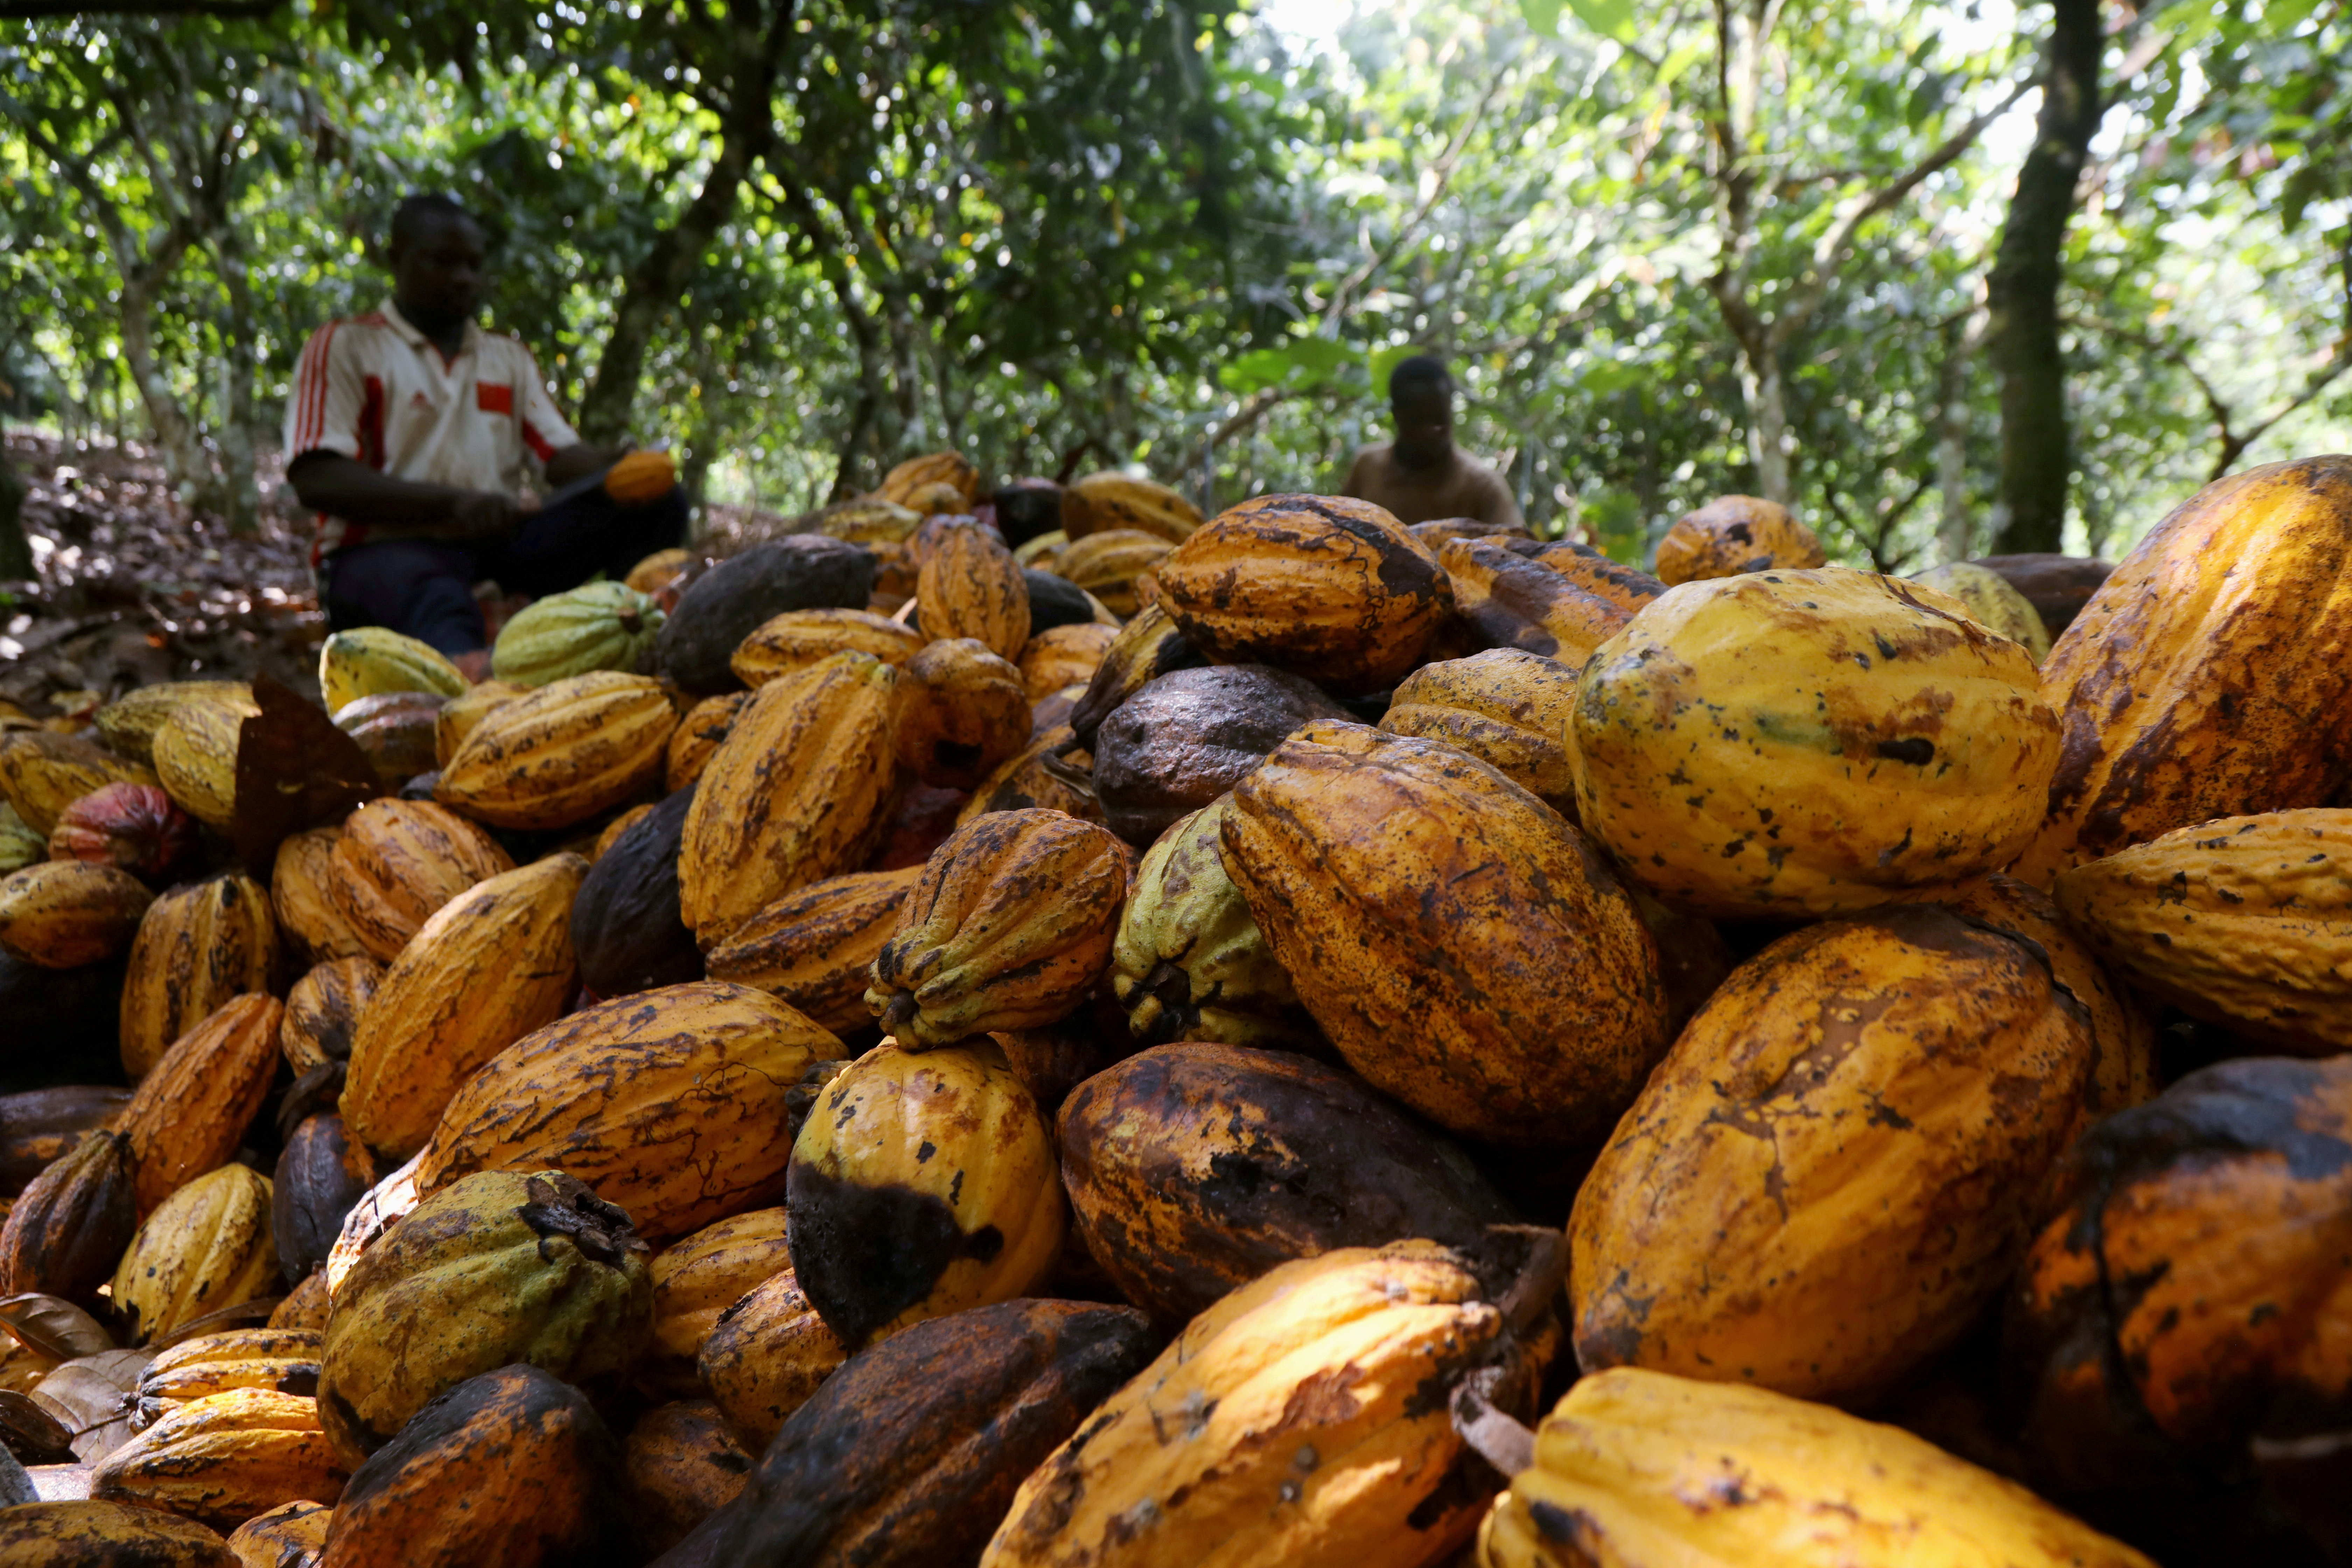 Farmers break cocoa pods at a cocoa farm in Soubre, Ivory Coast